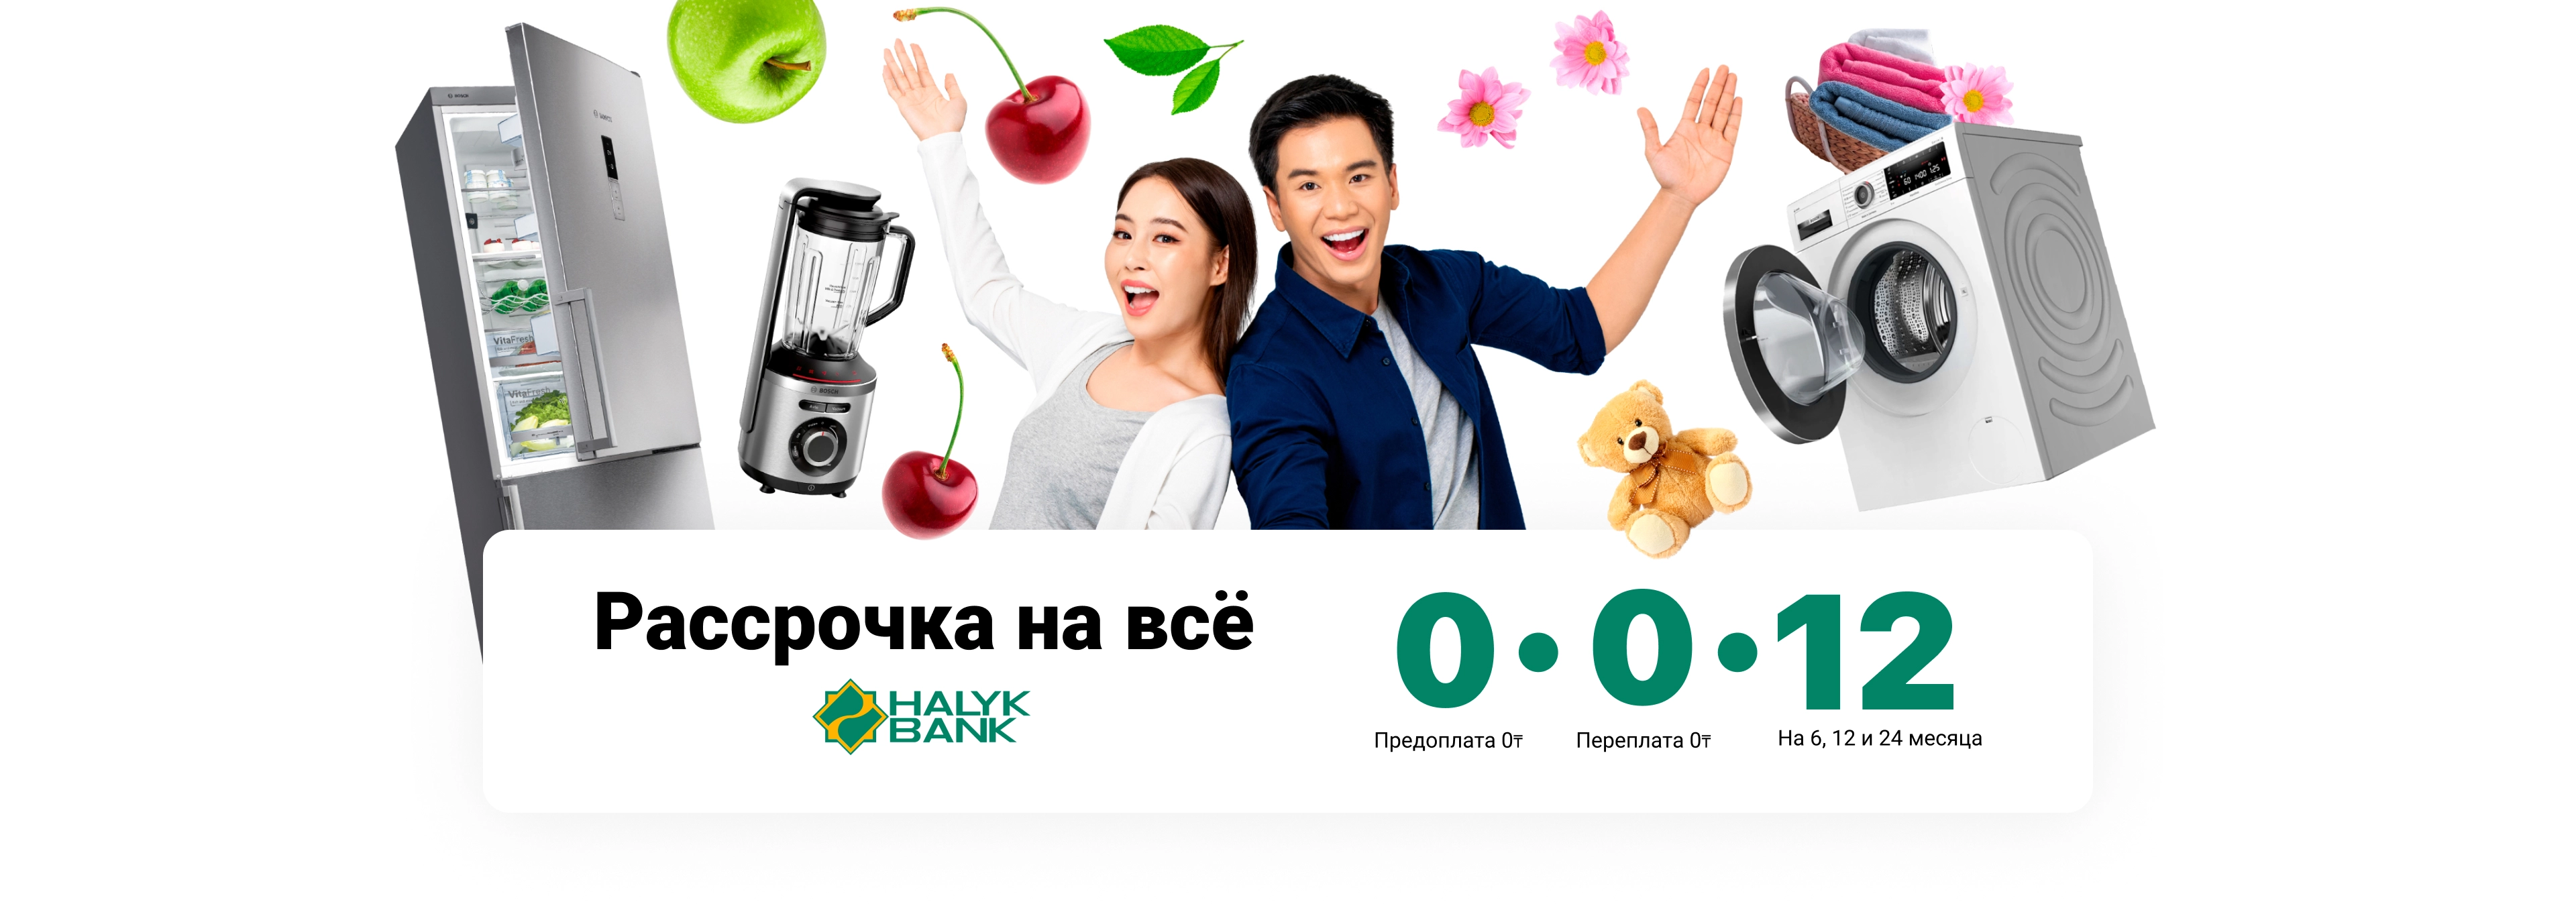 Рассрочка Halyk 0-0-12